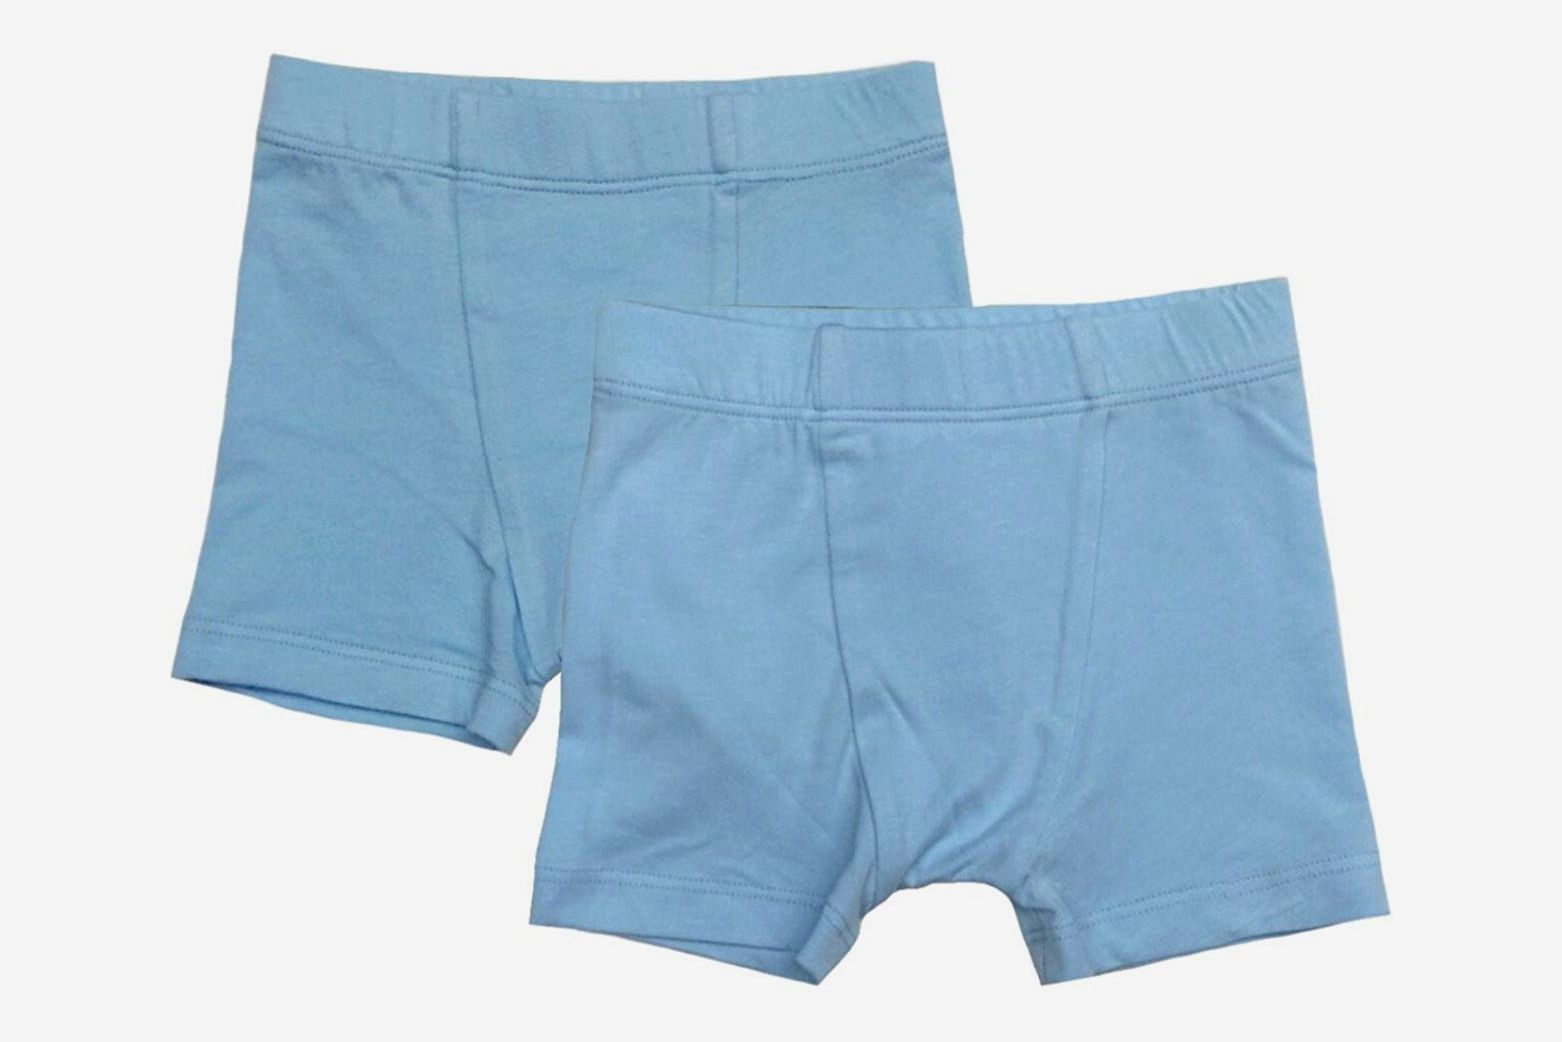 City Threads Boys' Boxer Briefs 3 Pack Underwear in 100% Organic Cotton Made in USA 